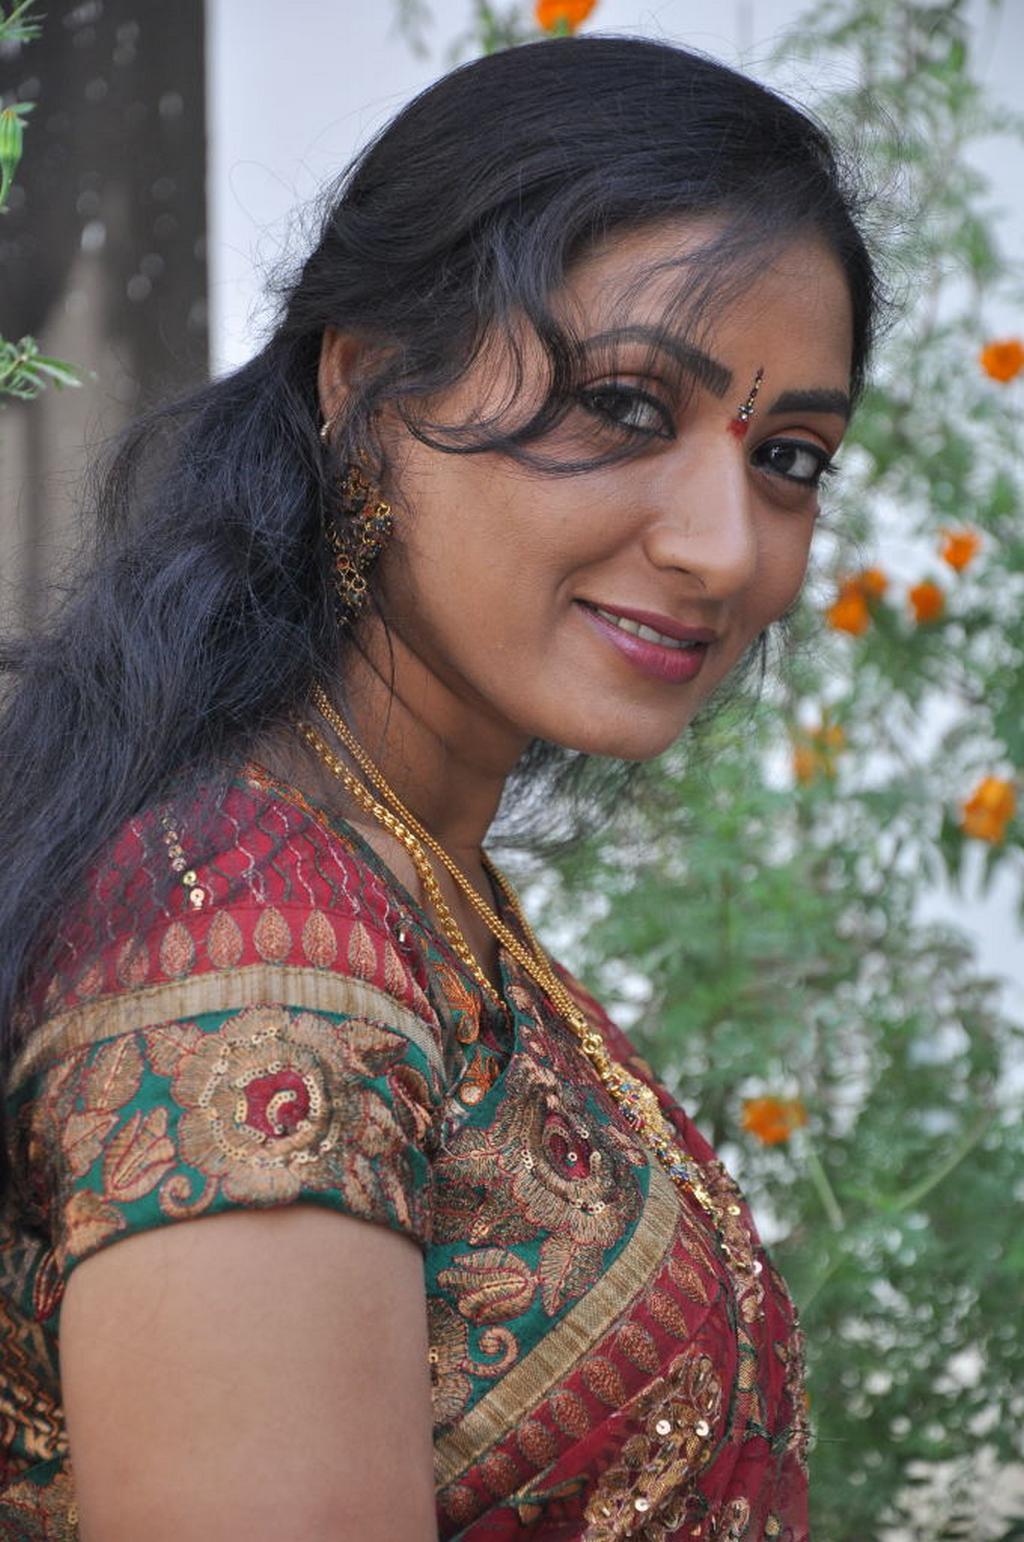 Telugu Galleries. Photo. Event Photo. Telugu Actress. Telugu